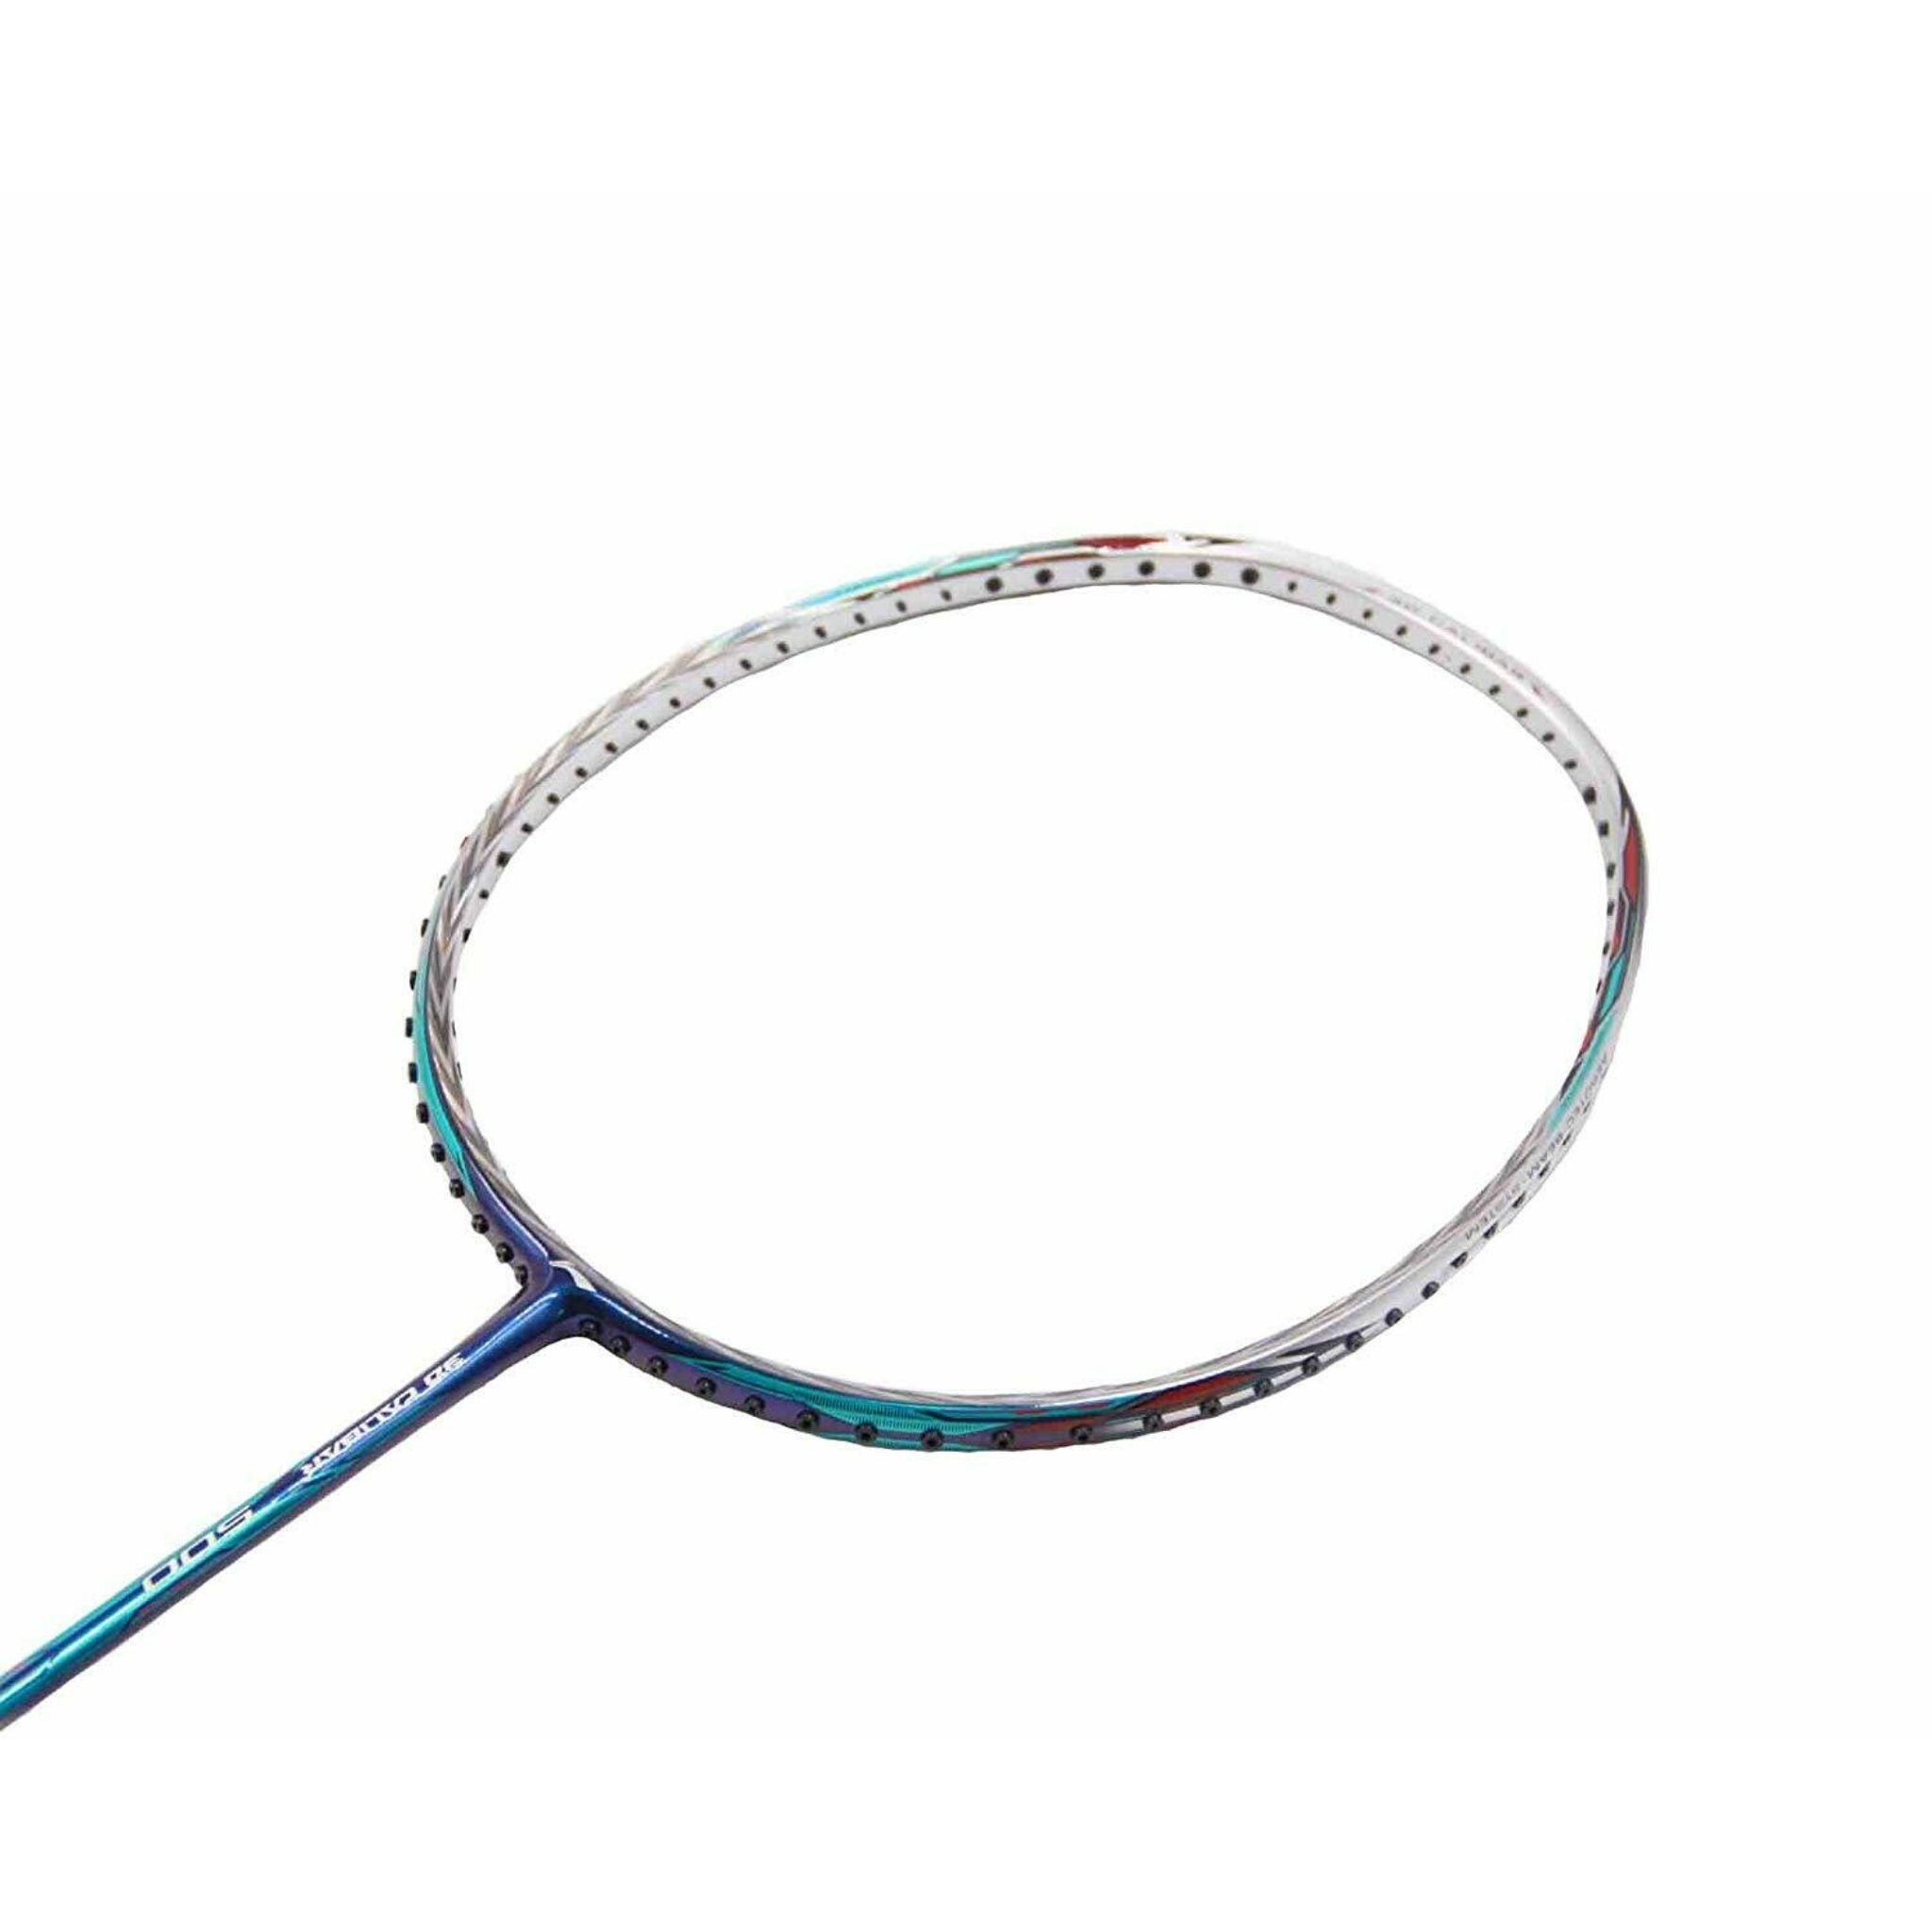 LI-NING 3D Calibar 500 Badminton Racket